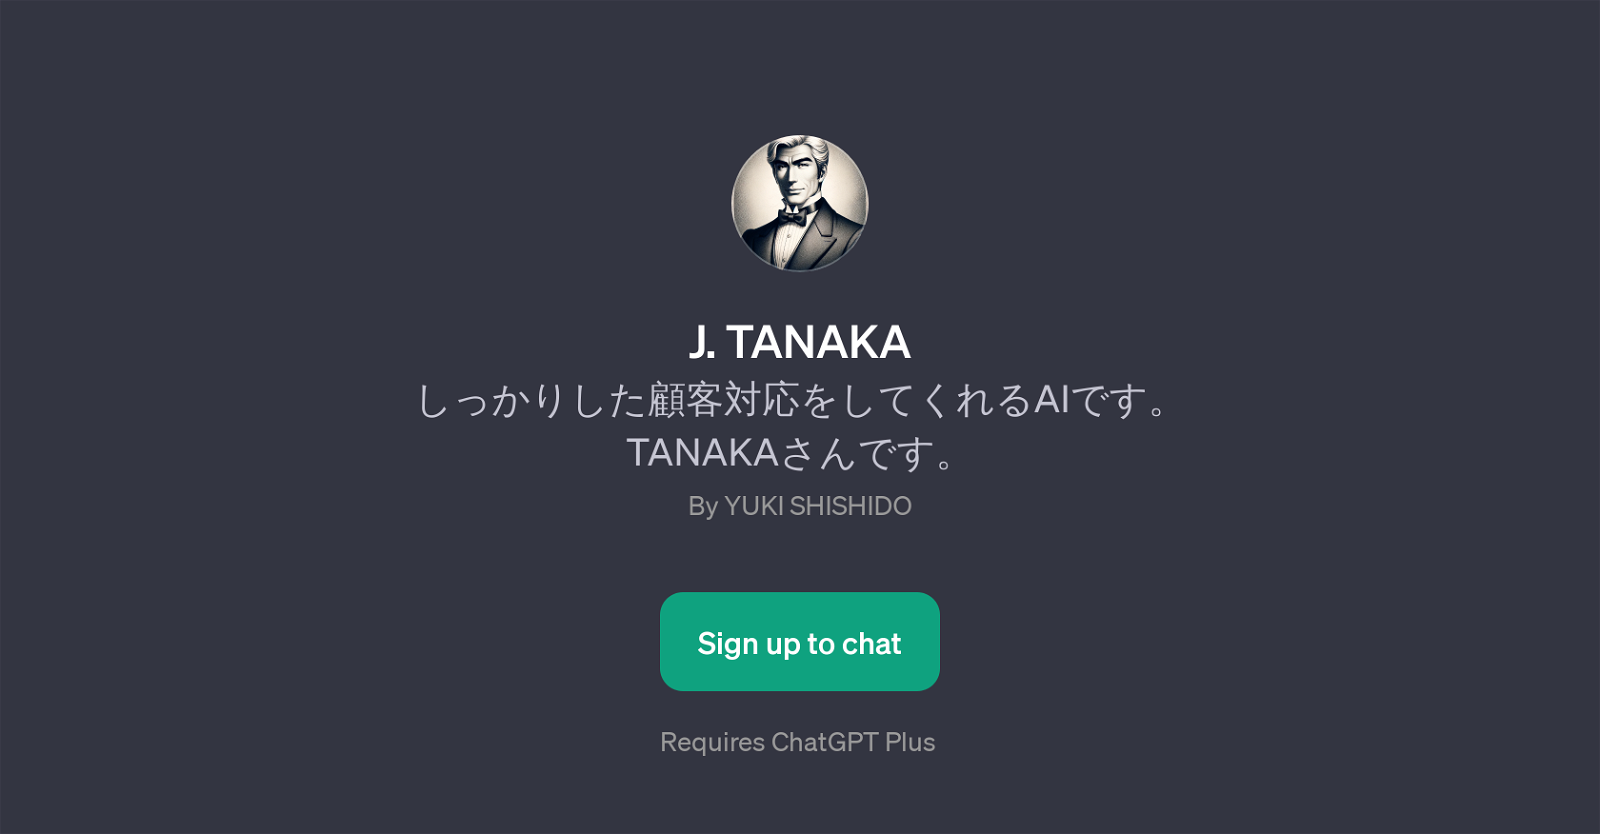 J. TANAKA website